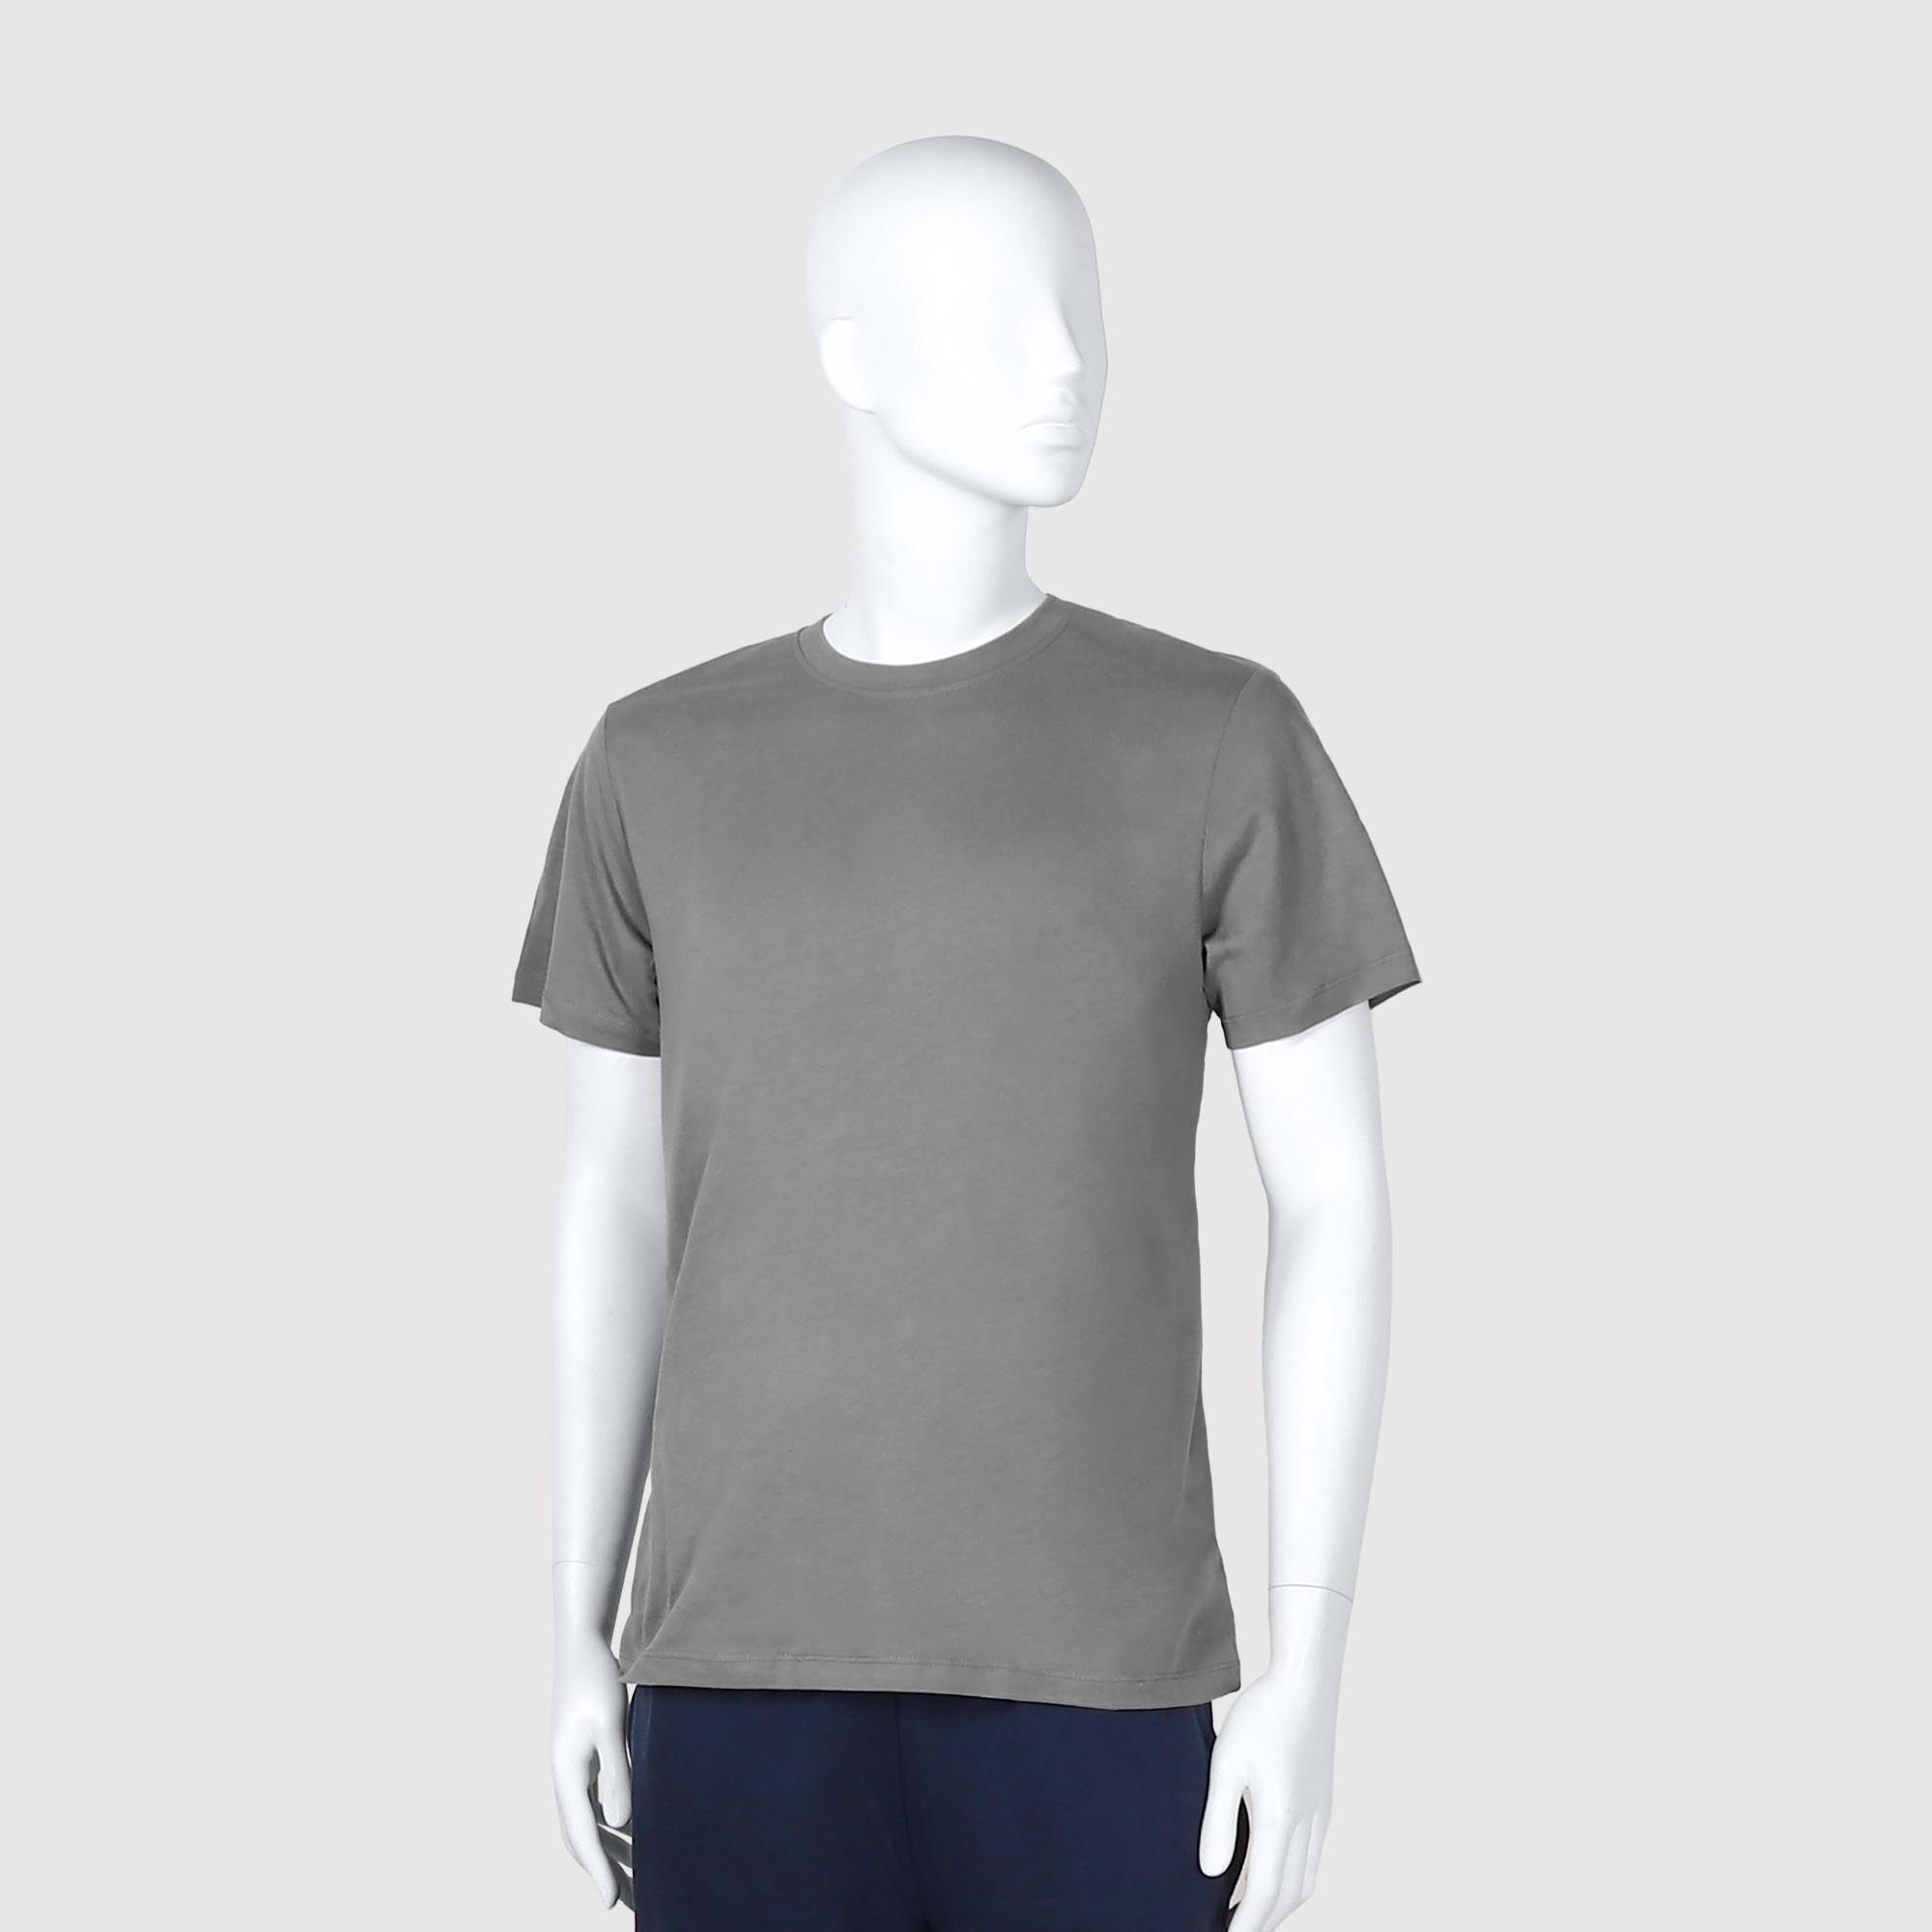 Мужская футболка Diva Teks серая (DTD-04), цвет серый, размер 40-52 - фото 1